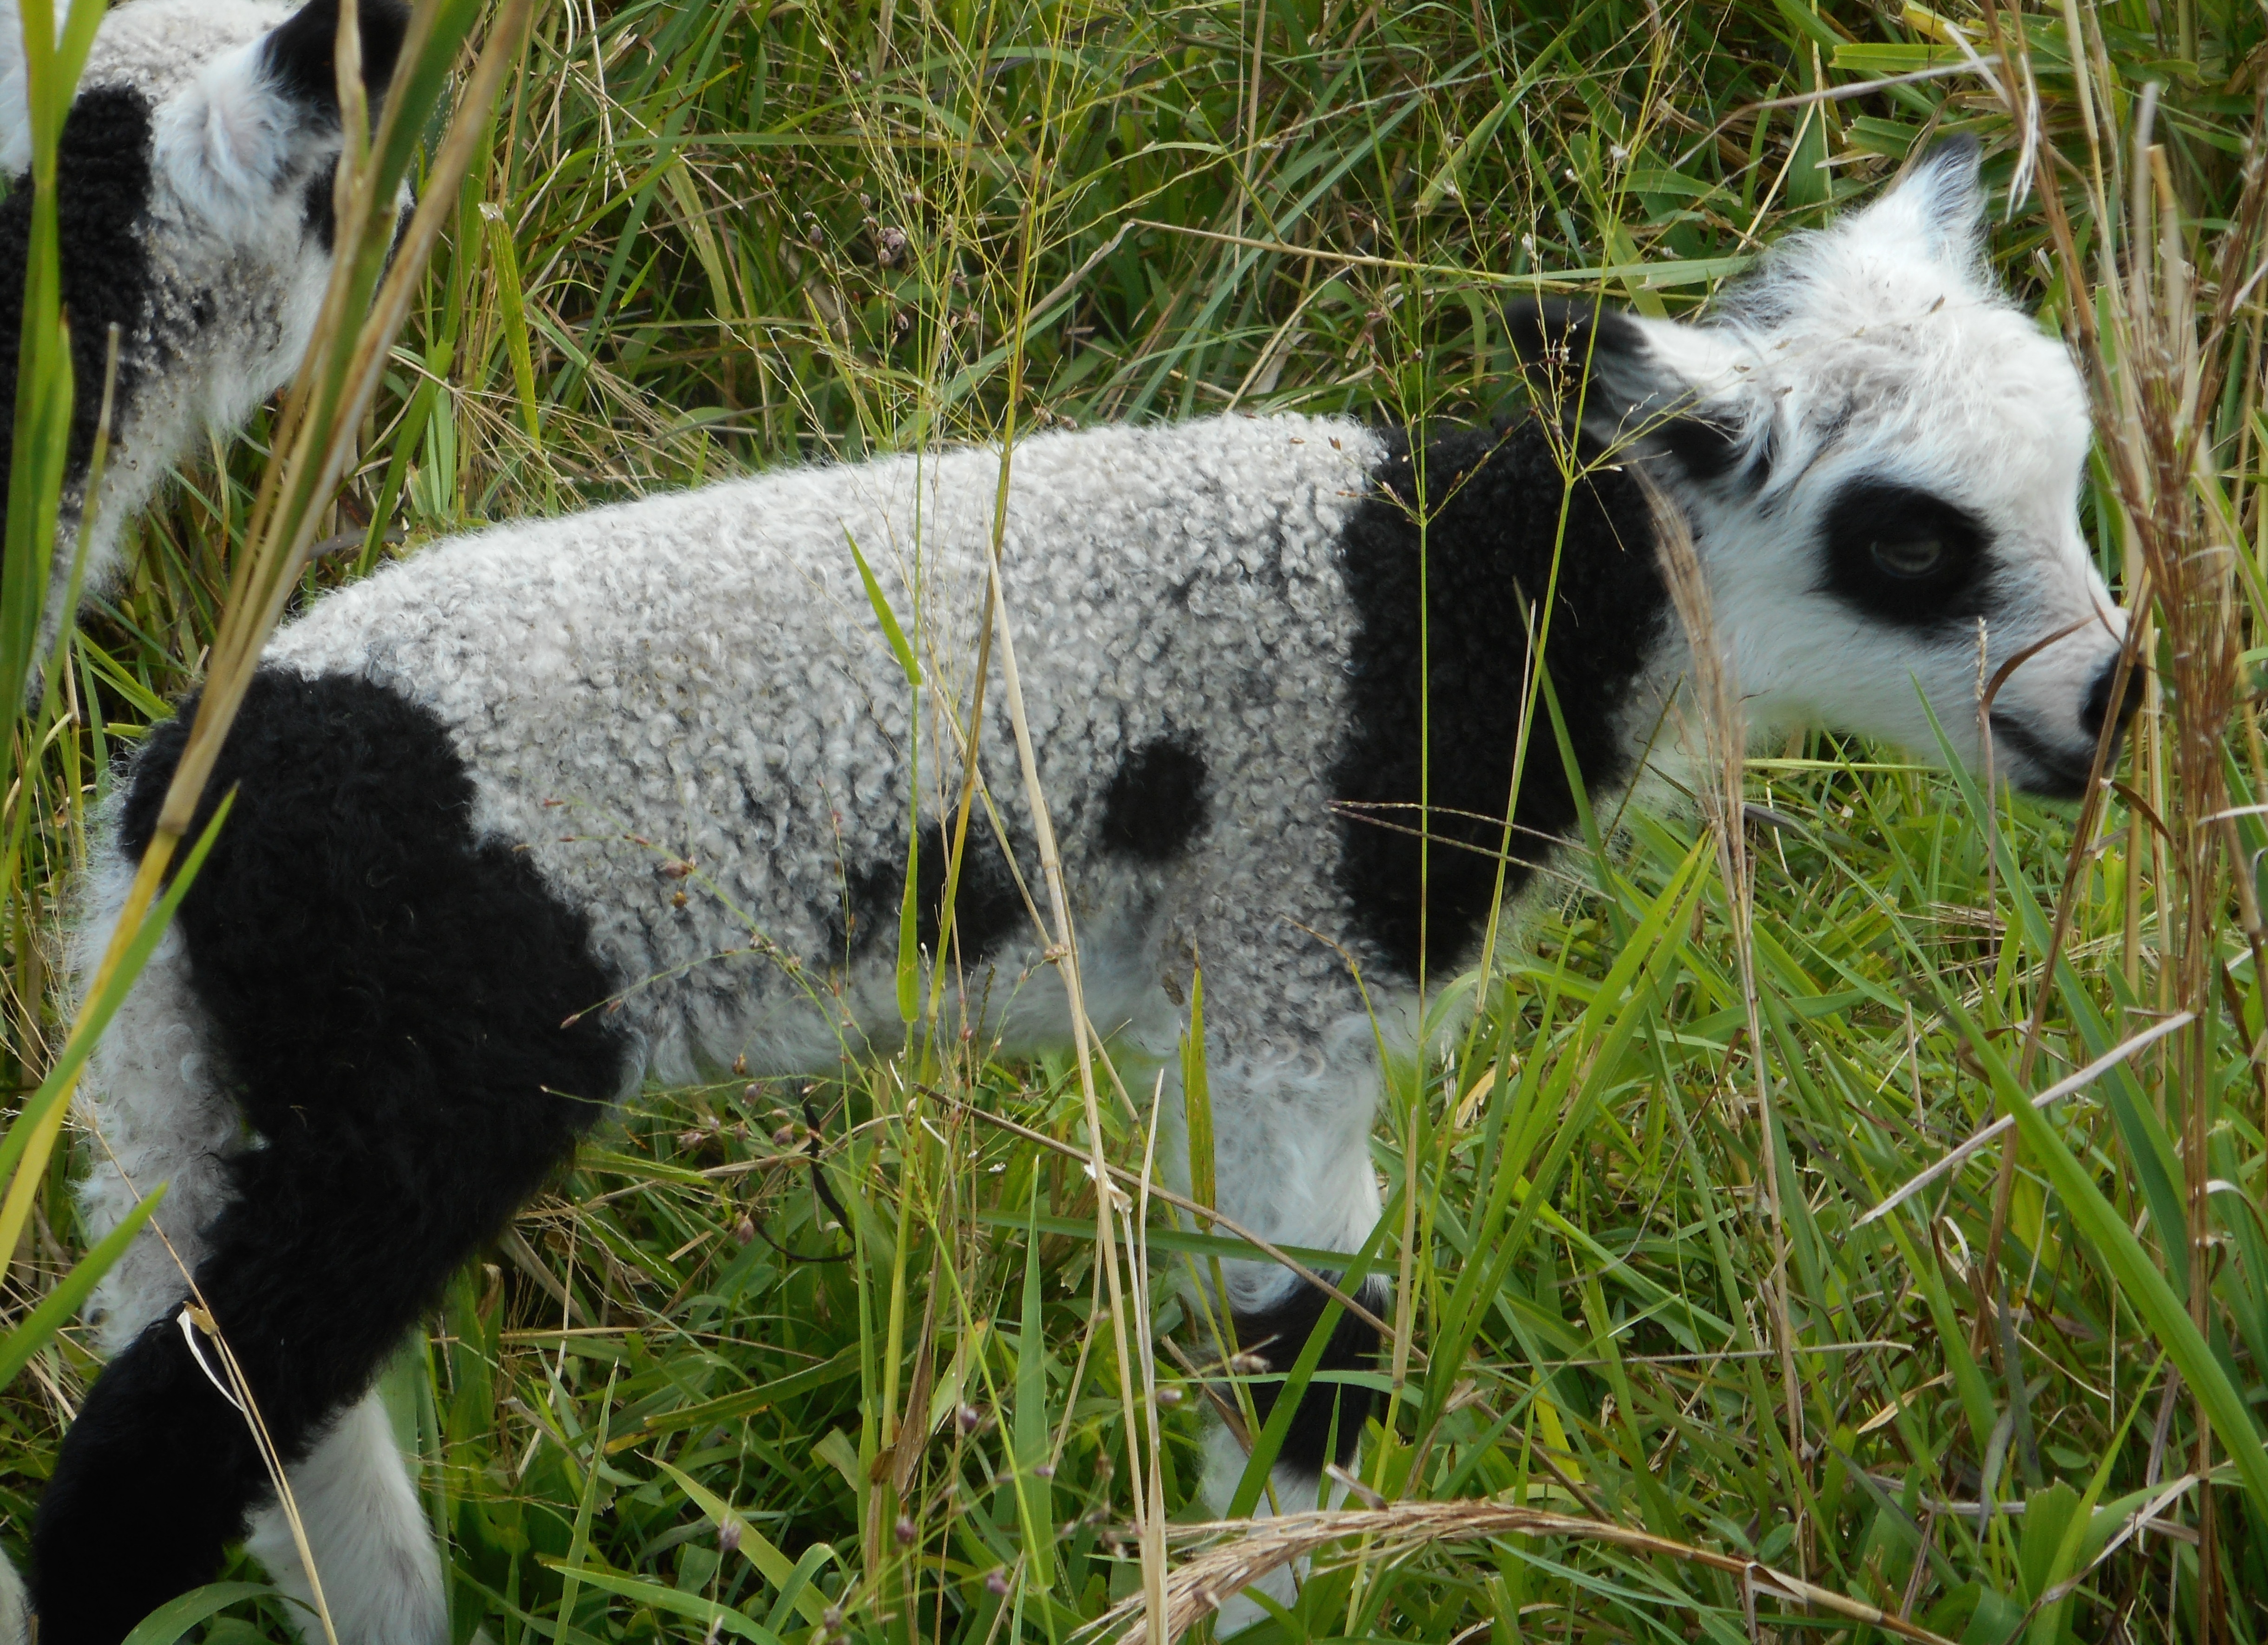 May's 1st born lamb